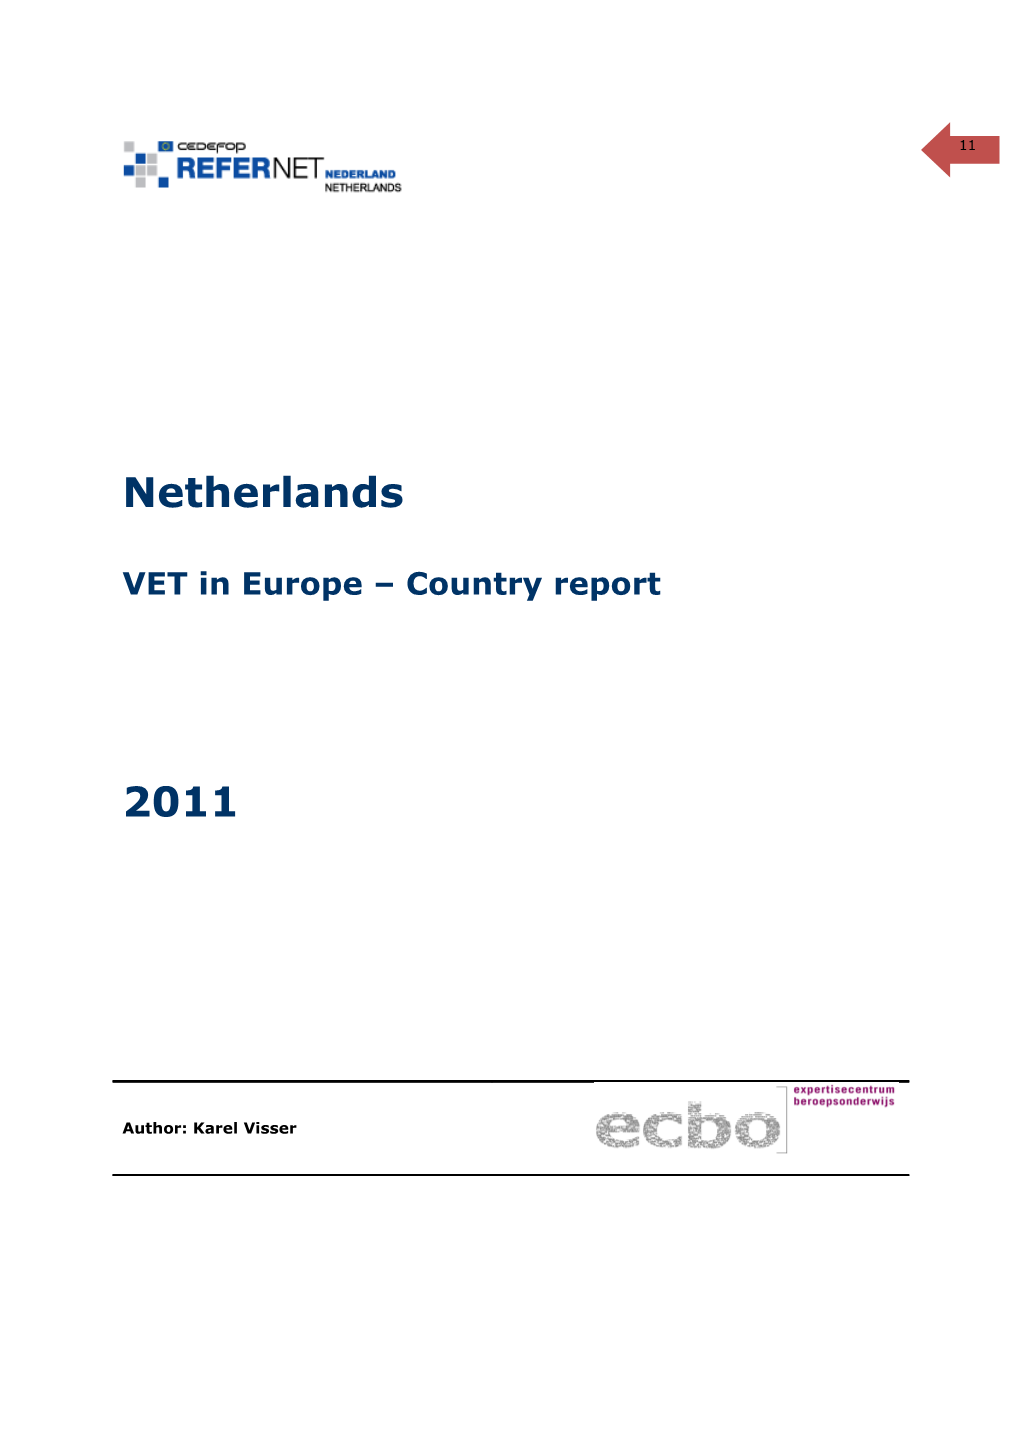 VET in Europe Country Report